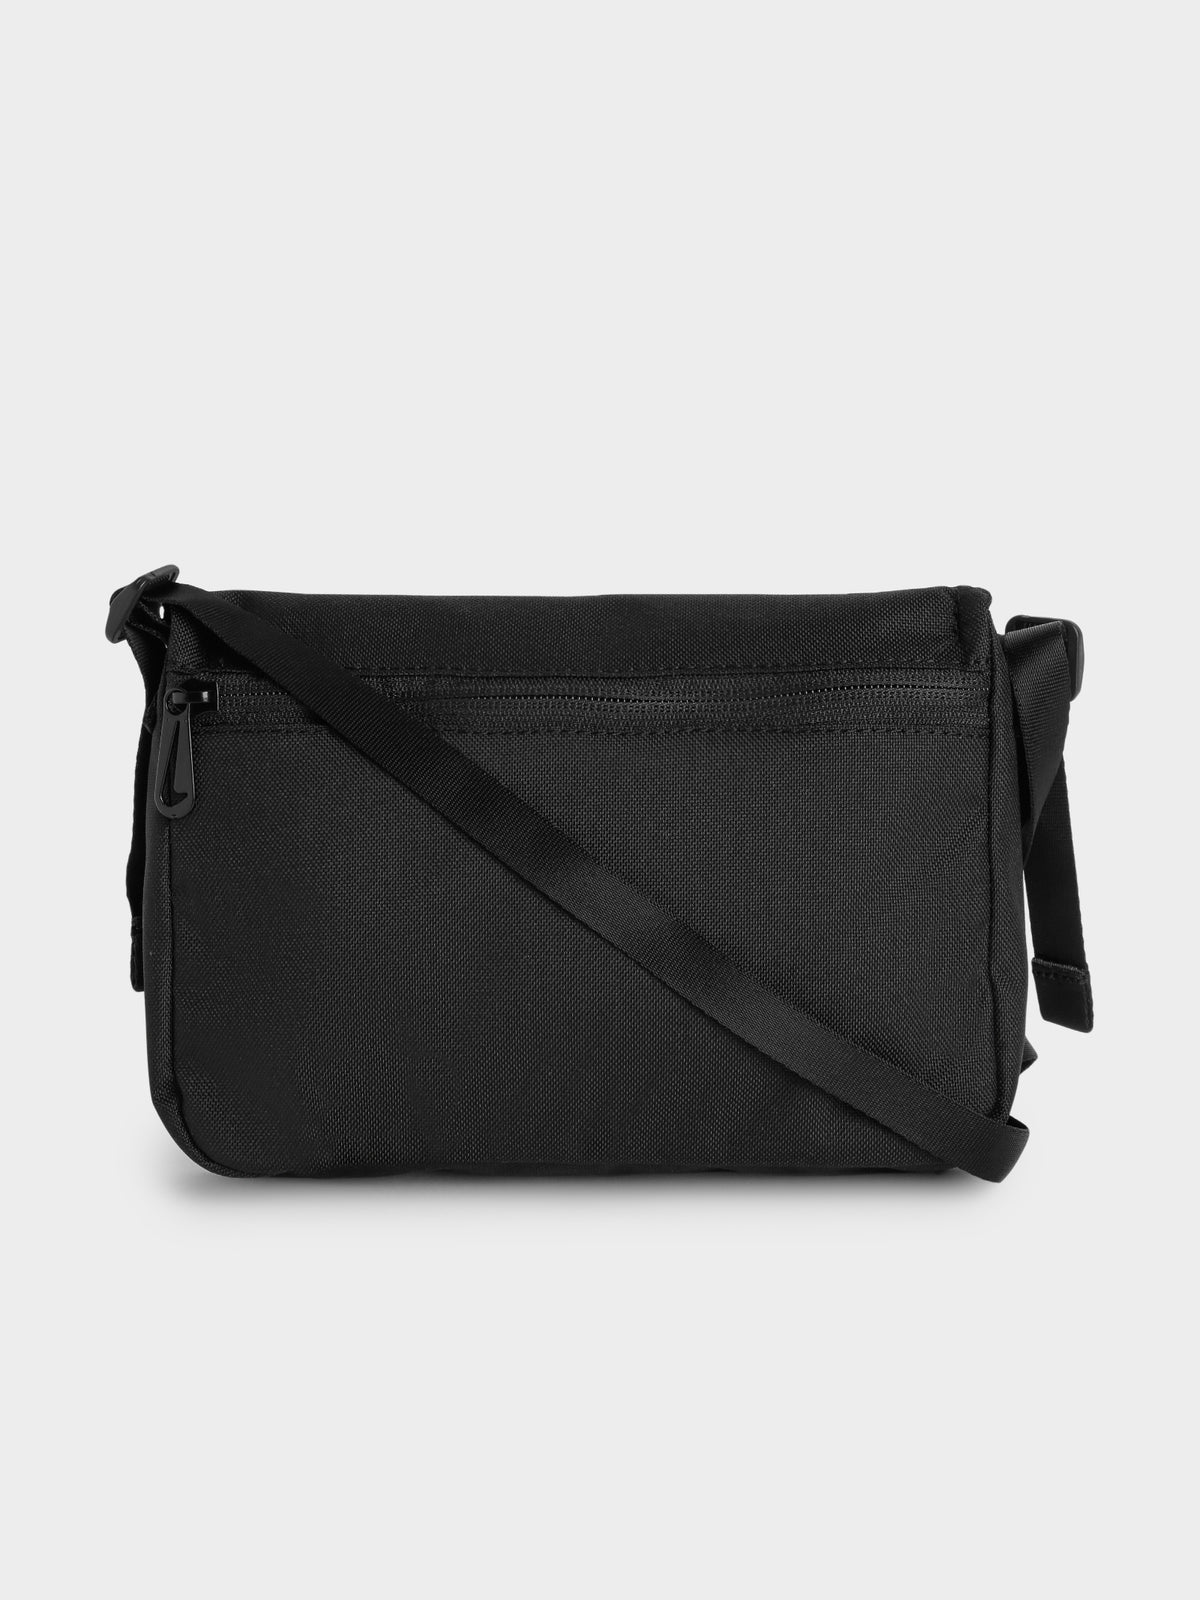 NSW Futra Sling Bag in Black